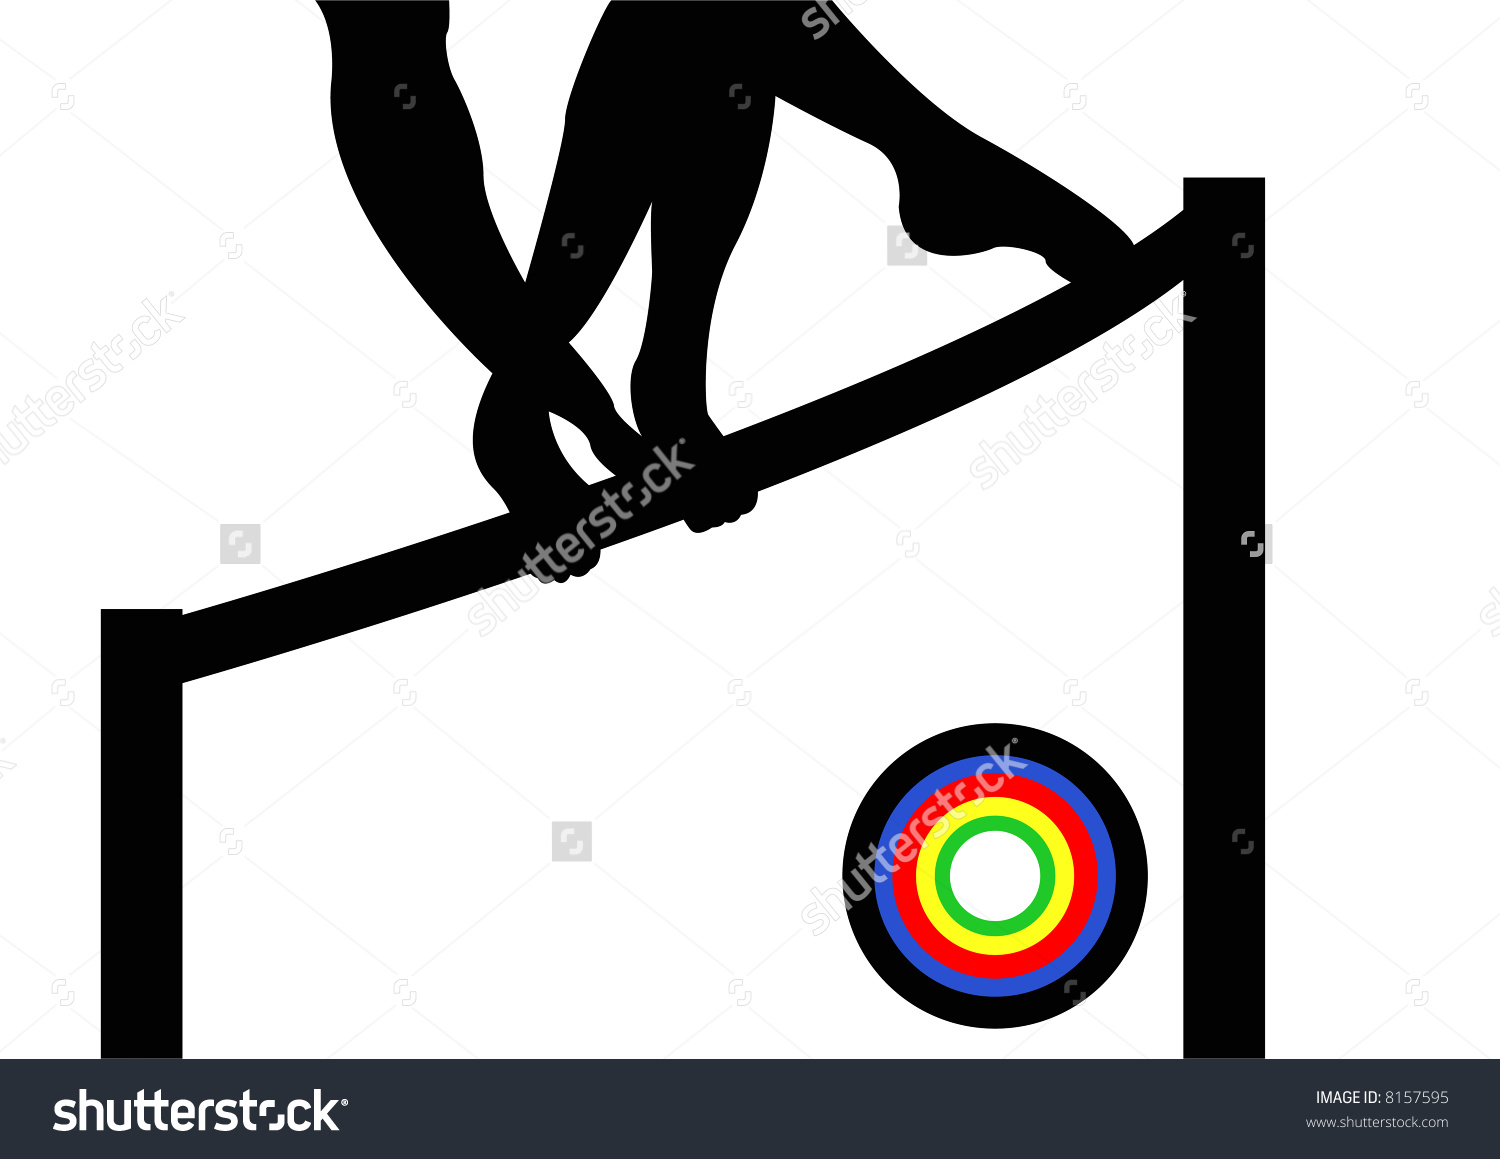 Olympics Gymnastics Uneven Bars Stock Illustration 8157595.